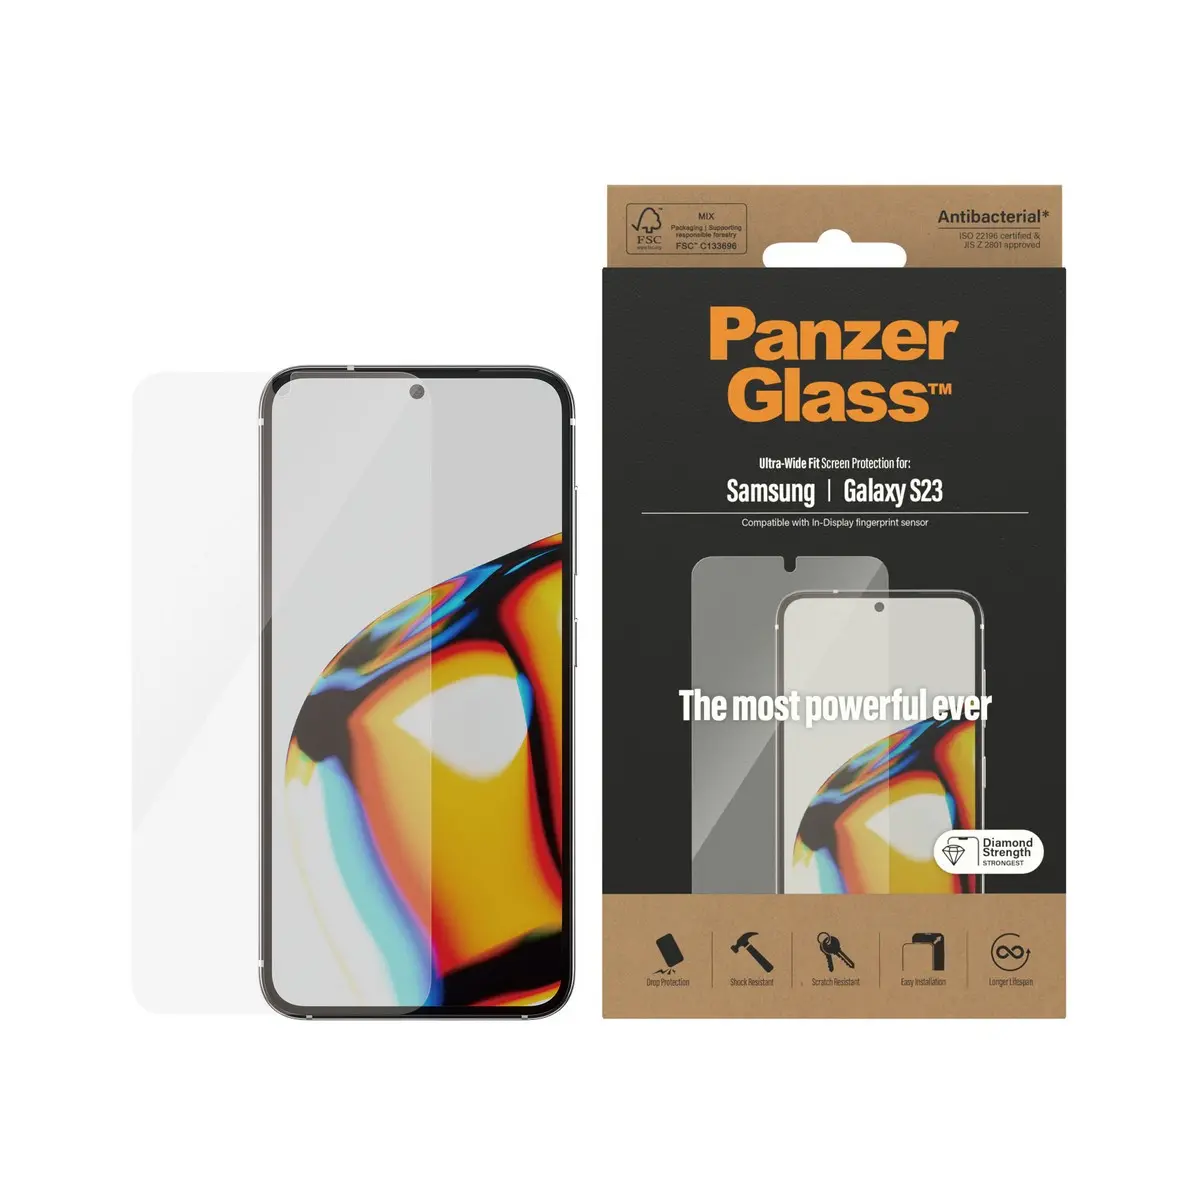 Panzerglass zaštitno staklo za Samsung Galaxy S23 ultra wide fit antibacterial image